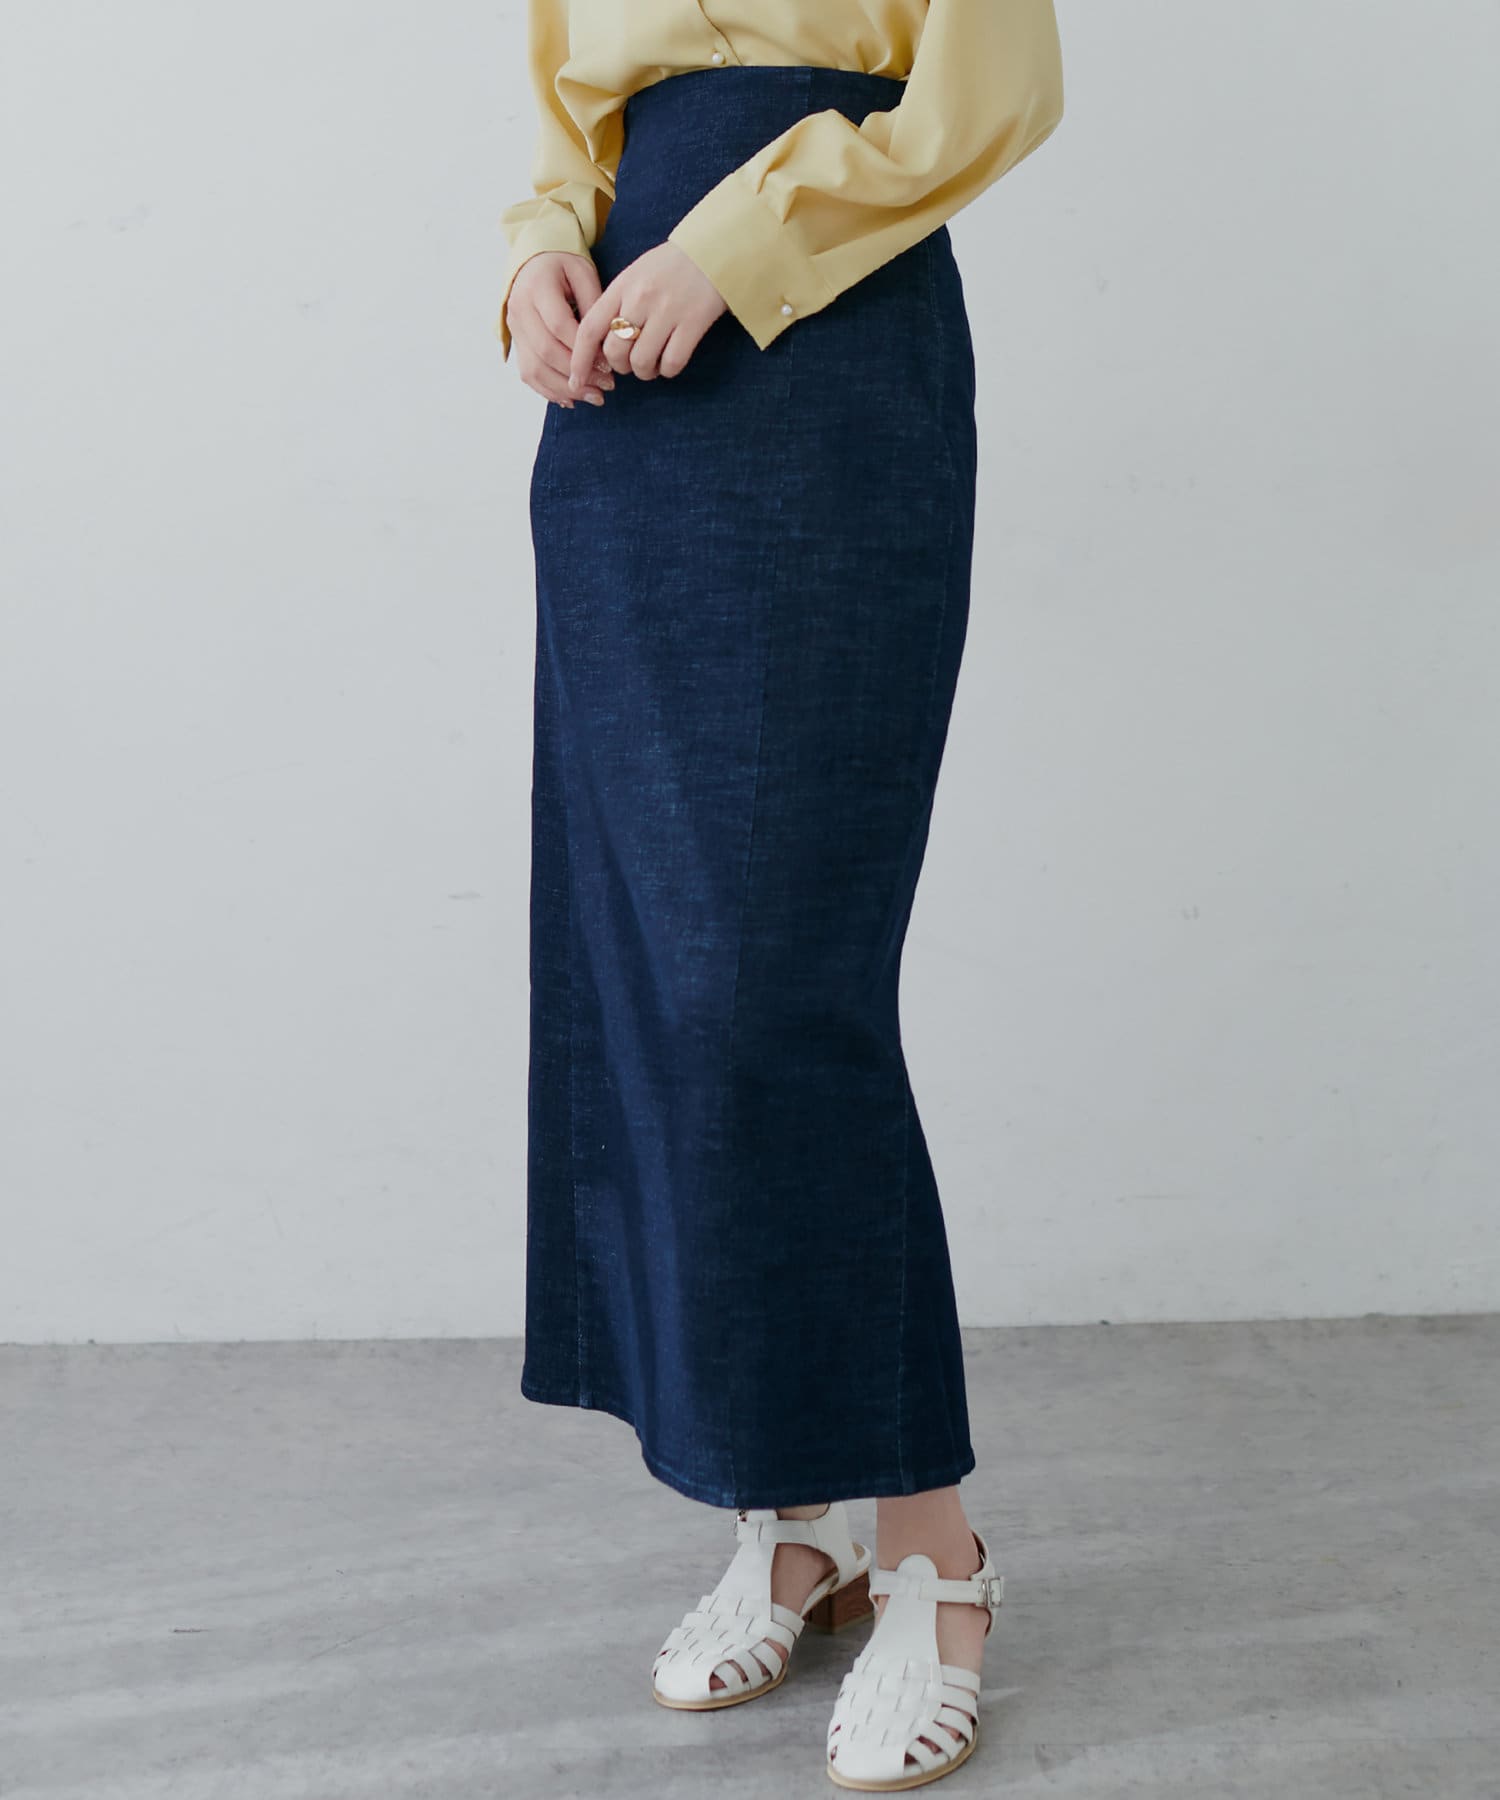 natural couture(ナチュラルクチュール) 【2サイズ展開】美シルエットなハイウエストタイトスカート